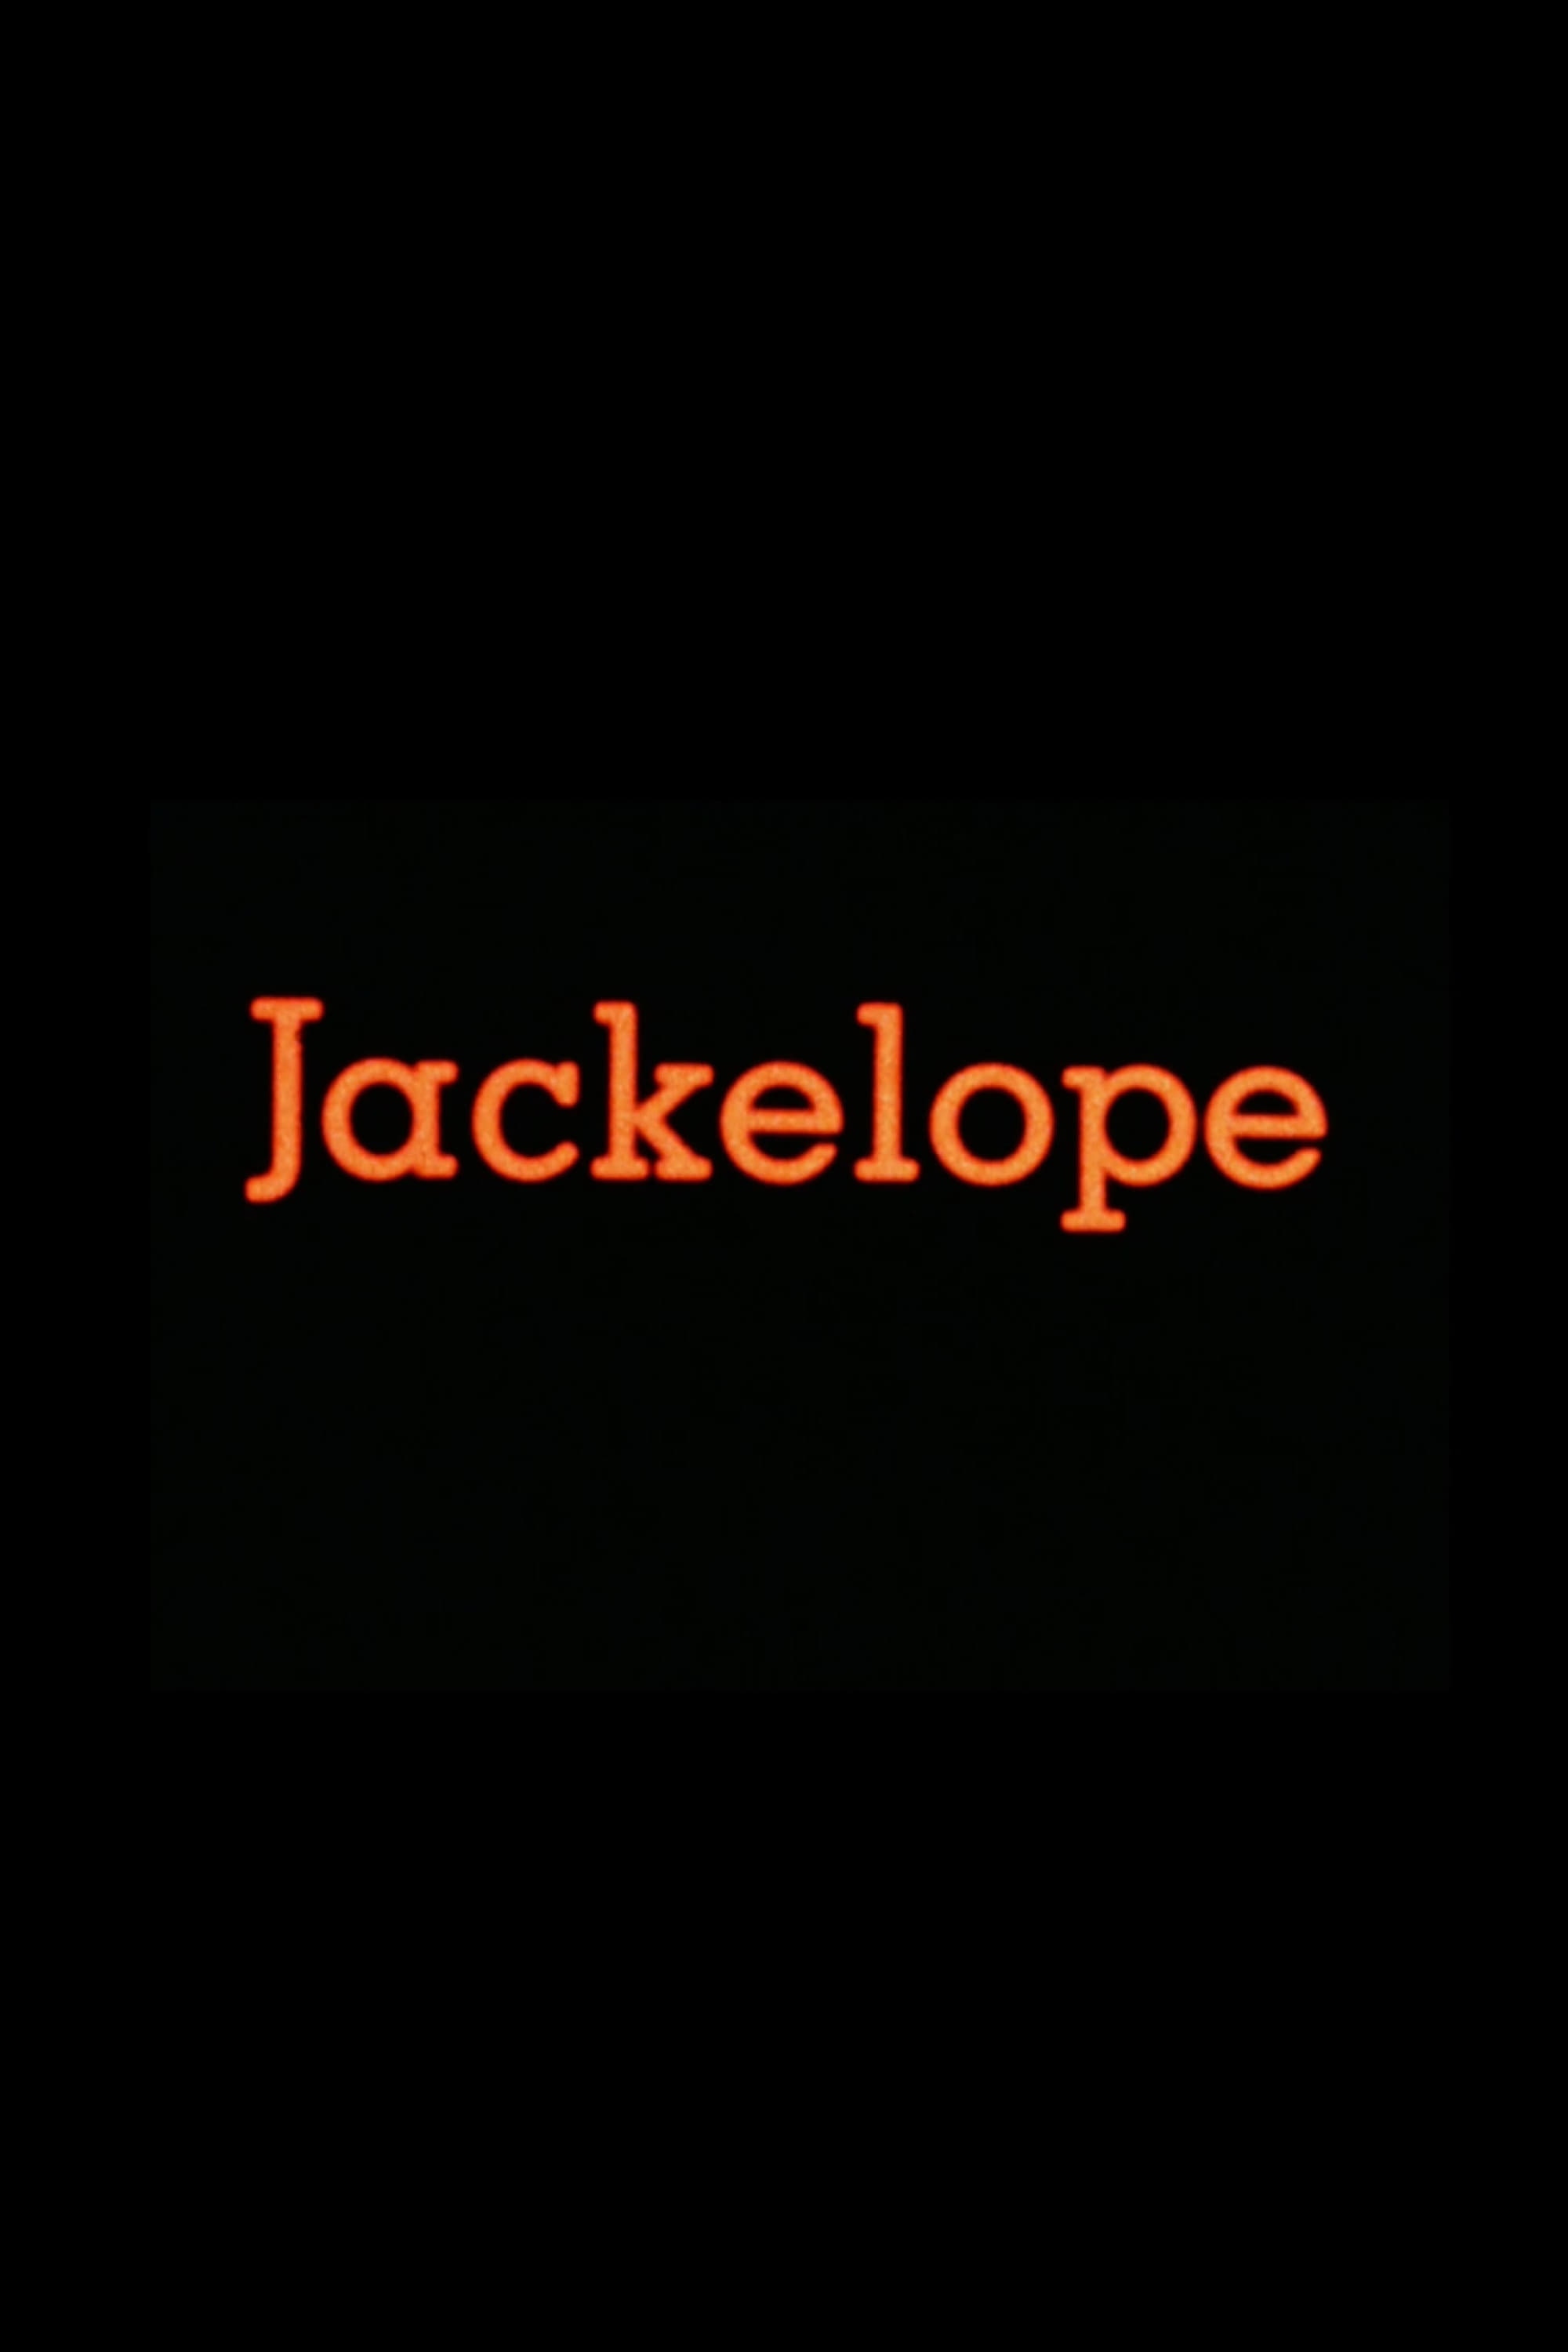 Jackelope